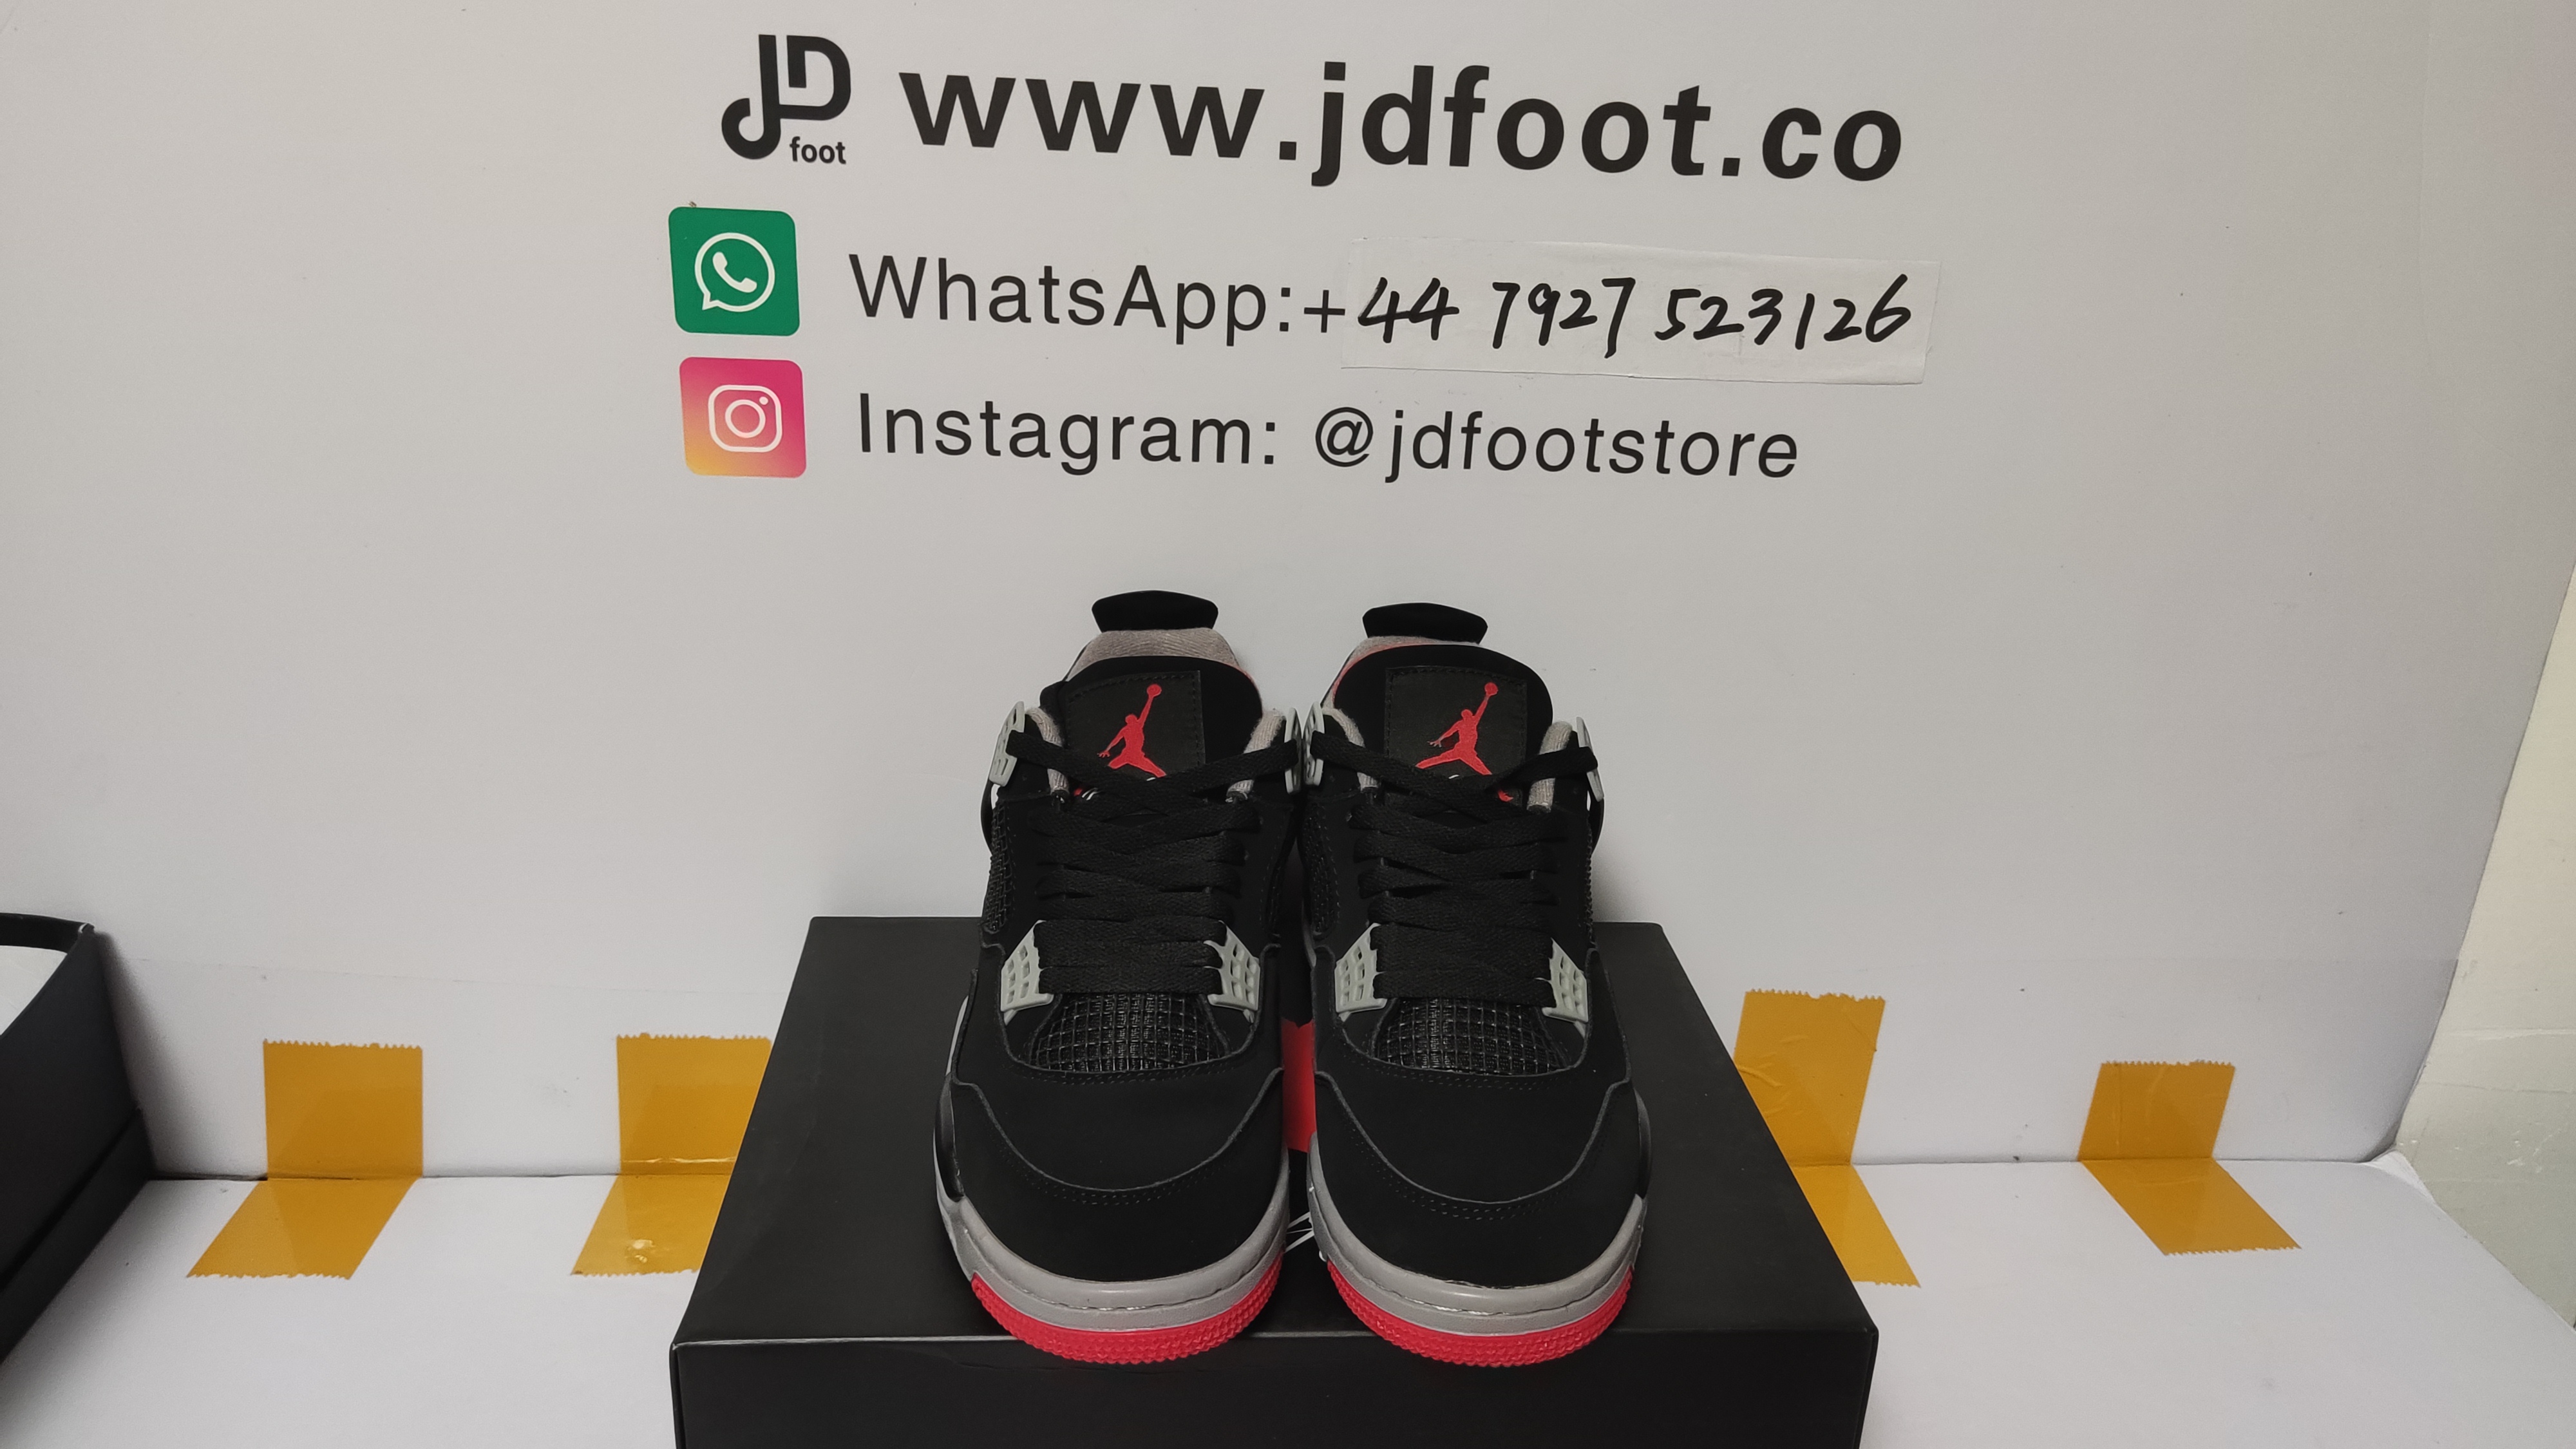 Jdfoot is the best quality replica jordan 4 website